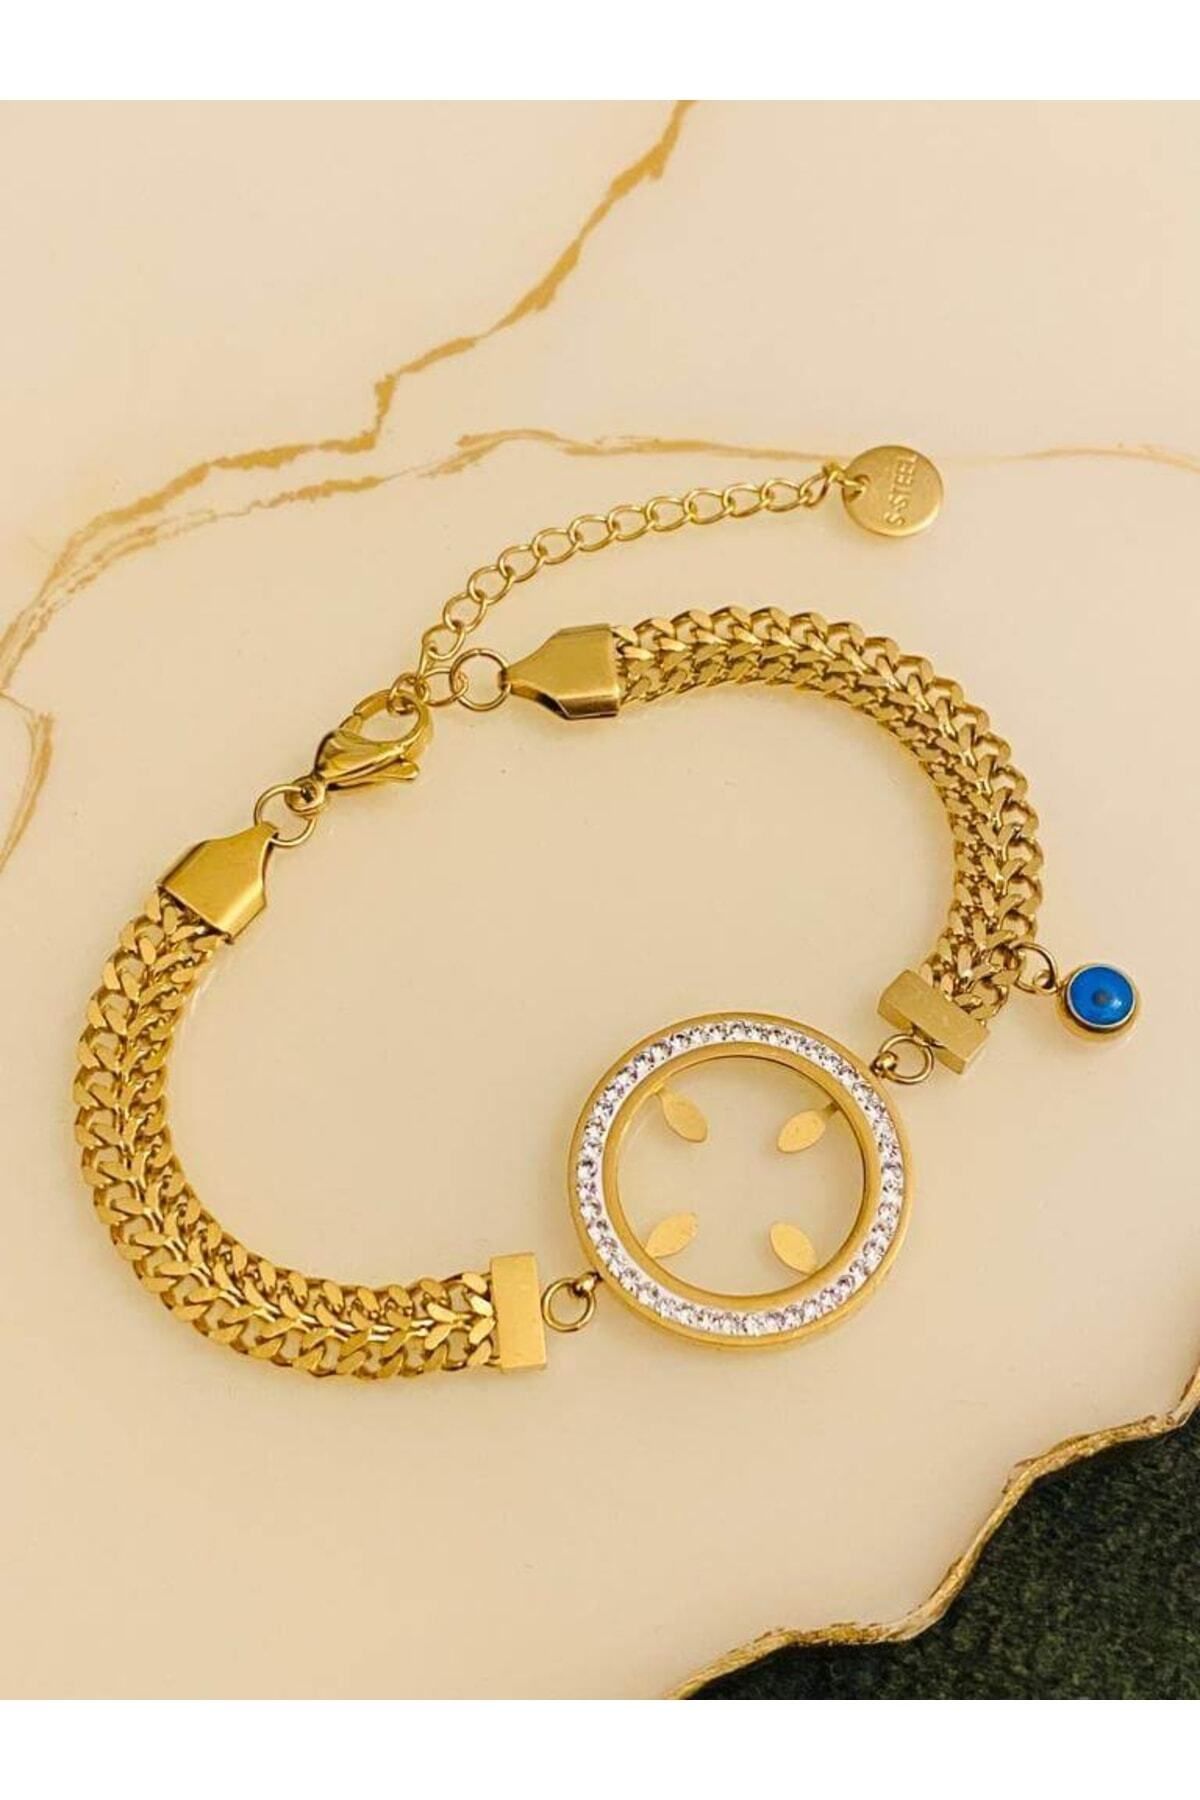 Louis Vuitton Empreinte chain bracelet, yellow gold (Q95619, Q95619)